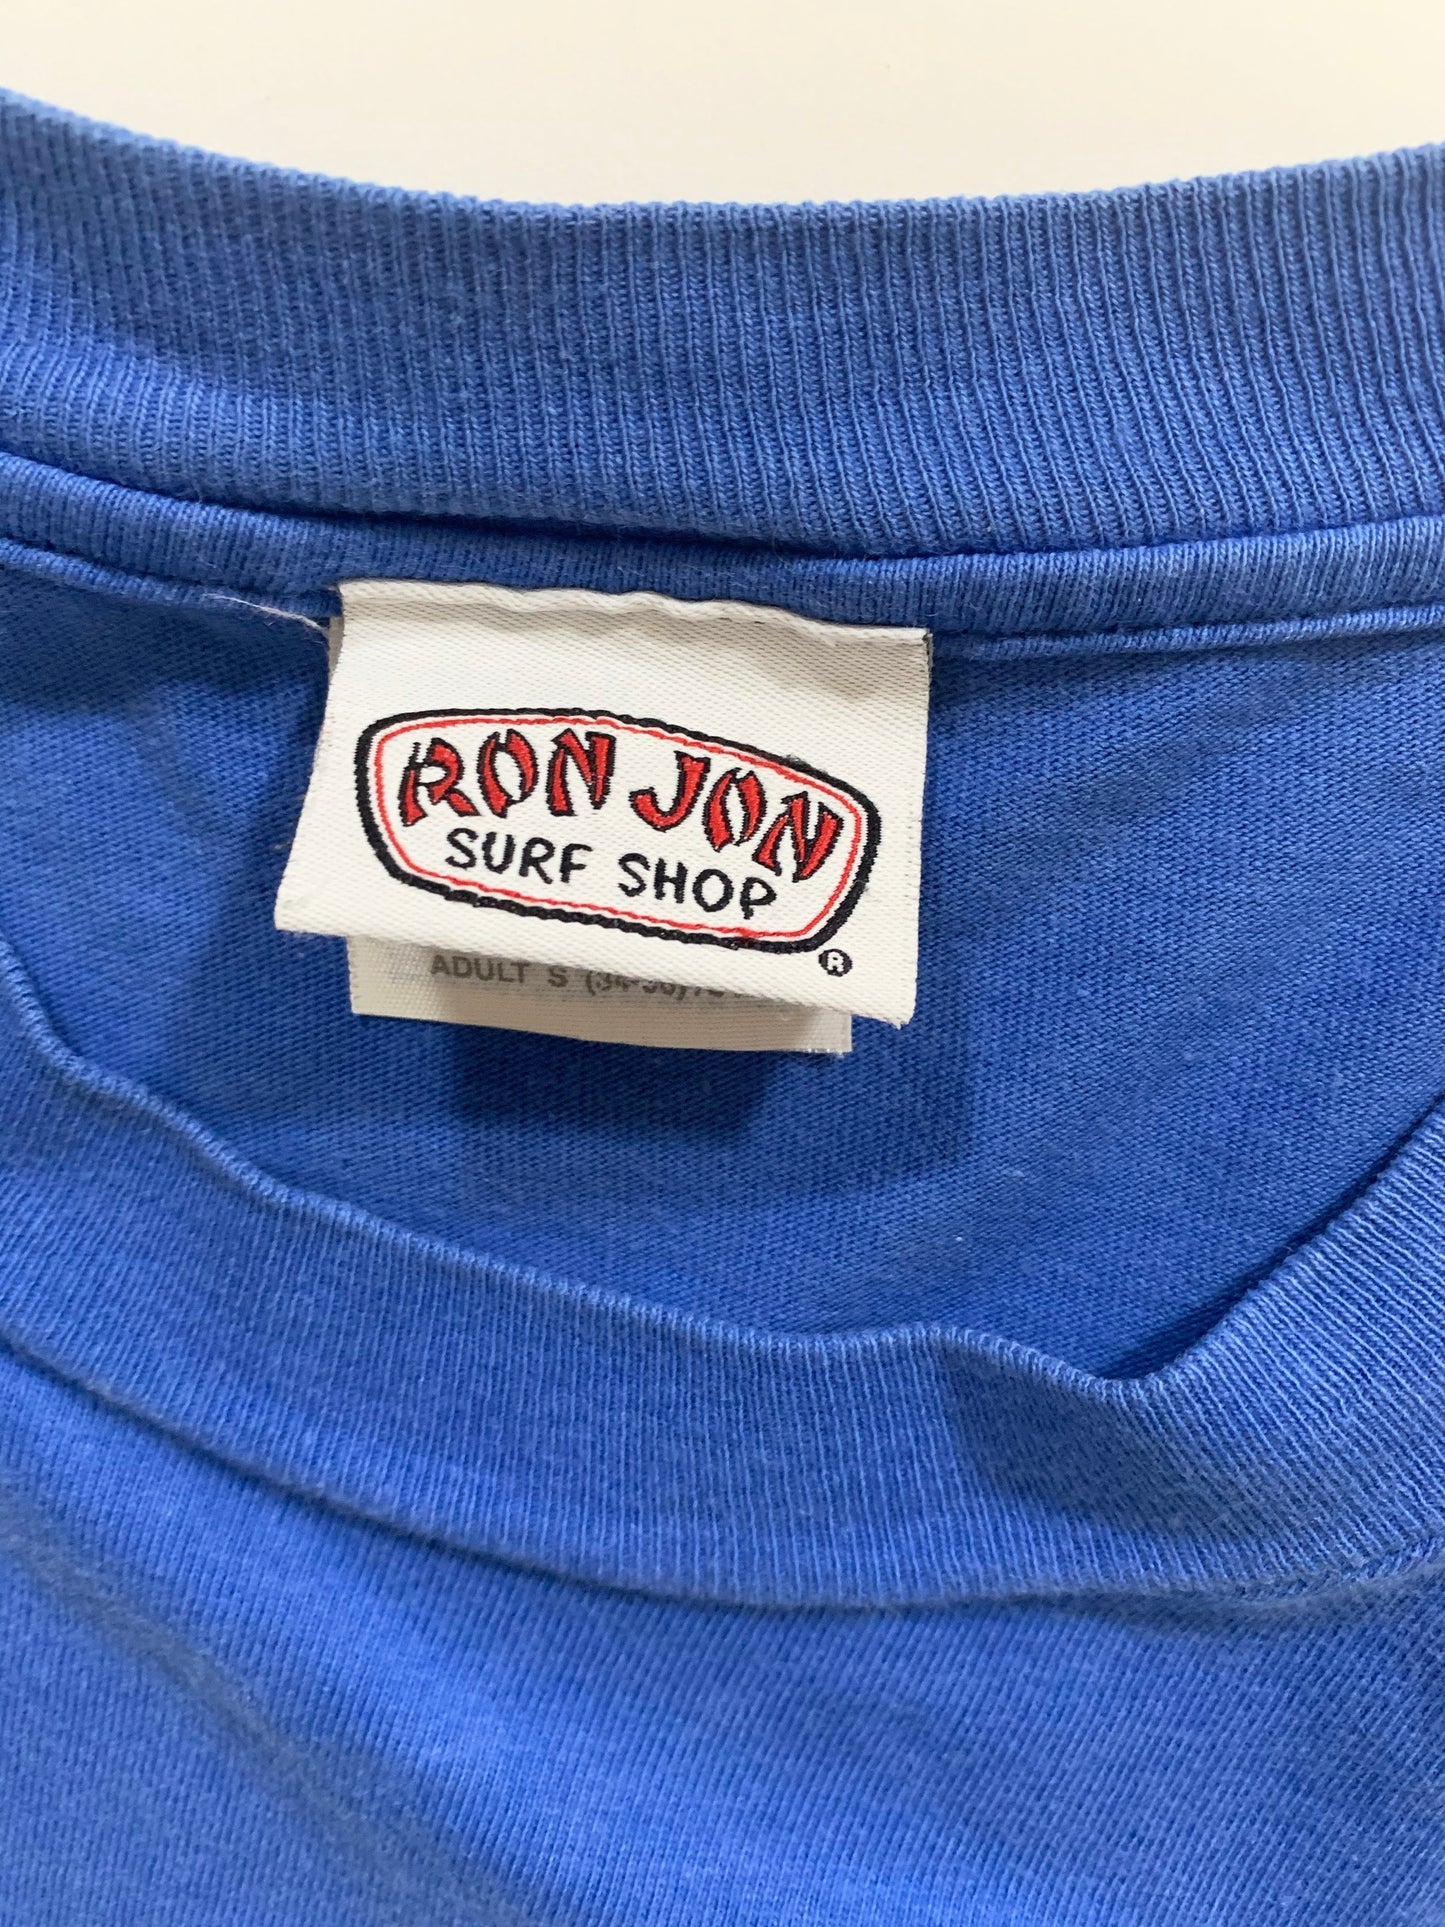 【RONJON SURF SHOP】ロンジョンサーフショップ ブルー Tシャツ (men's S)